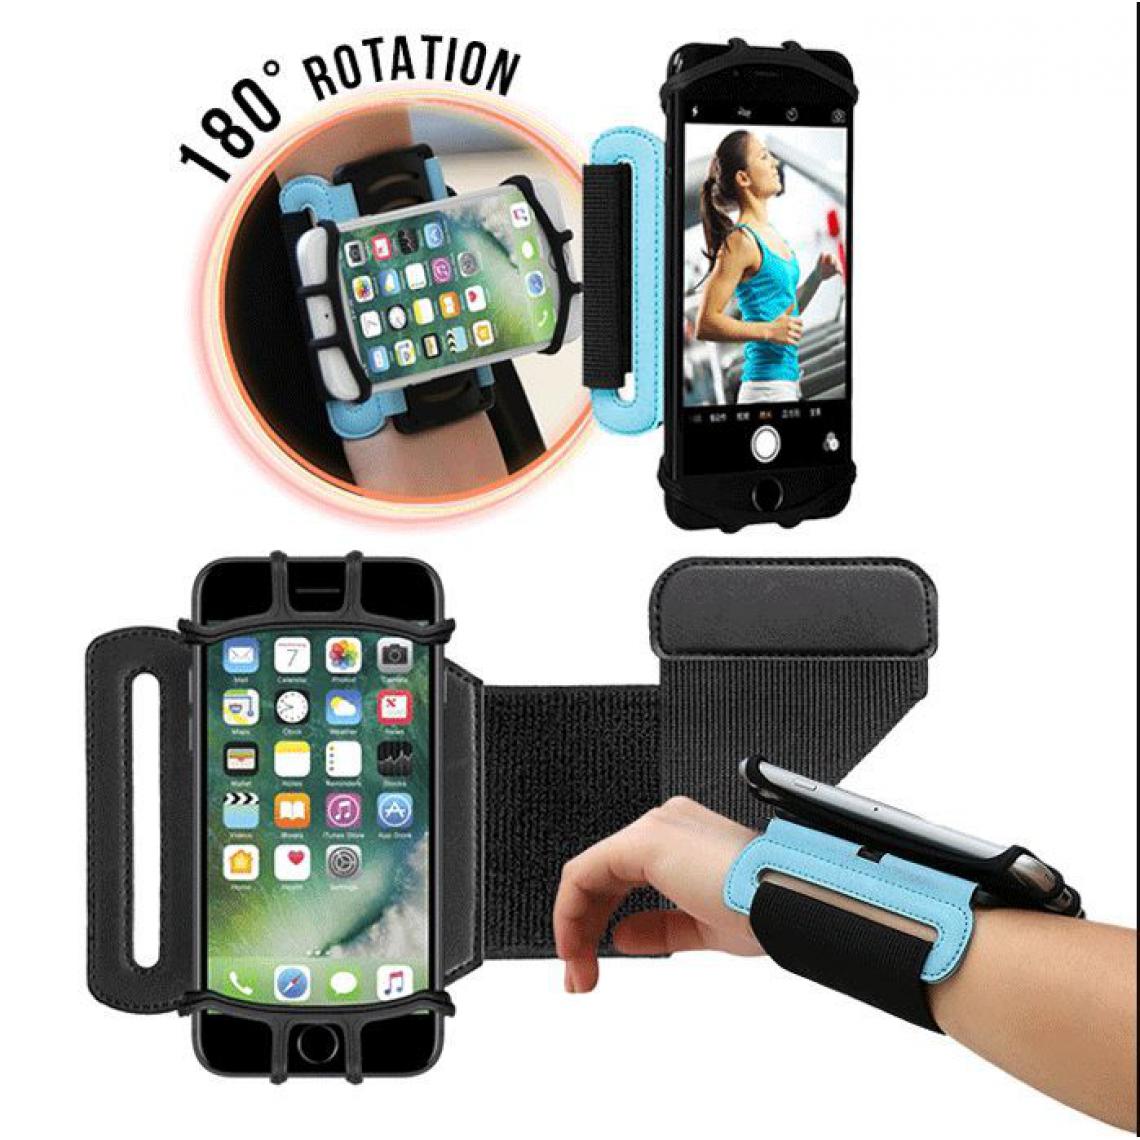 Ozzzo - Etui brassard sport bras rotative ozzzo noir pour SAMSUNG s8500 wave - Coque, étui smartphone